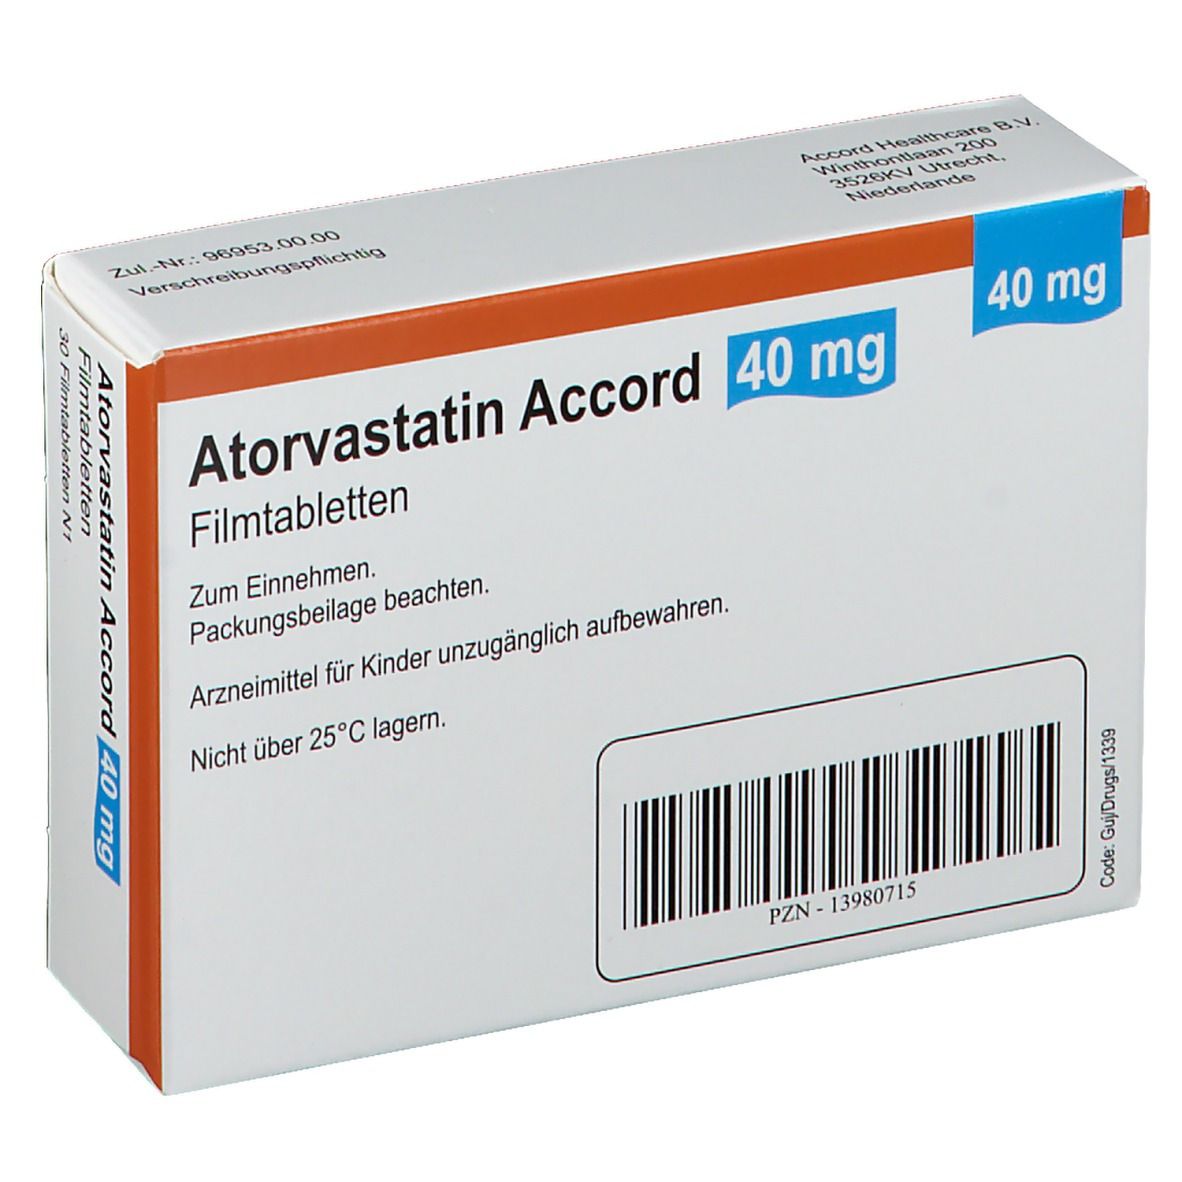 Atorvastatin Accord 40 mg